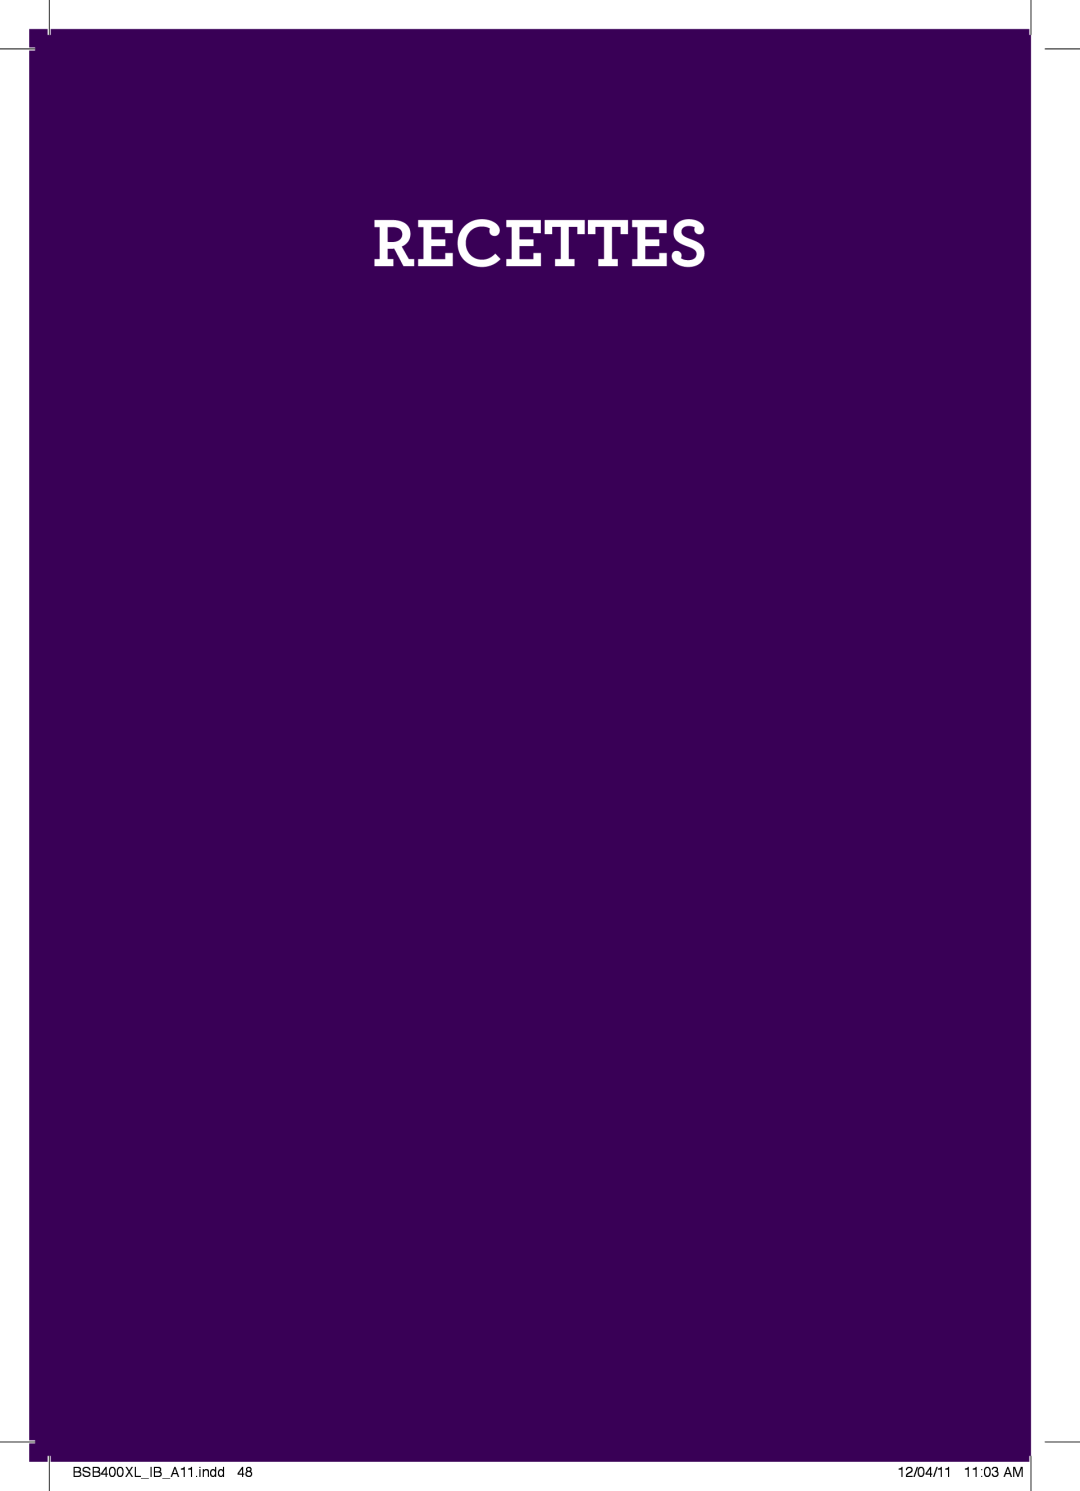 Breville manual Recettes, Typeset, BSB400XLIBA11.indd, 12/04/11 1103 AM 